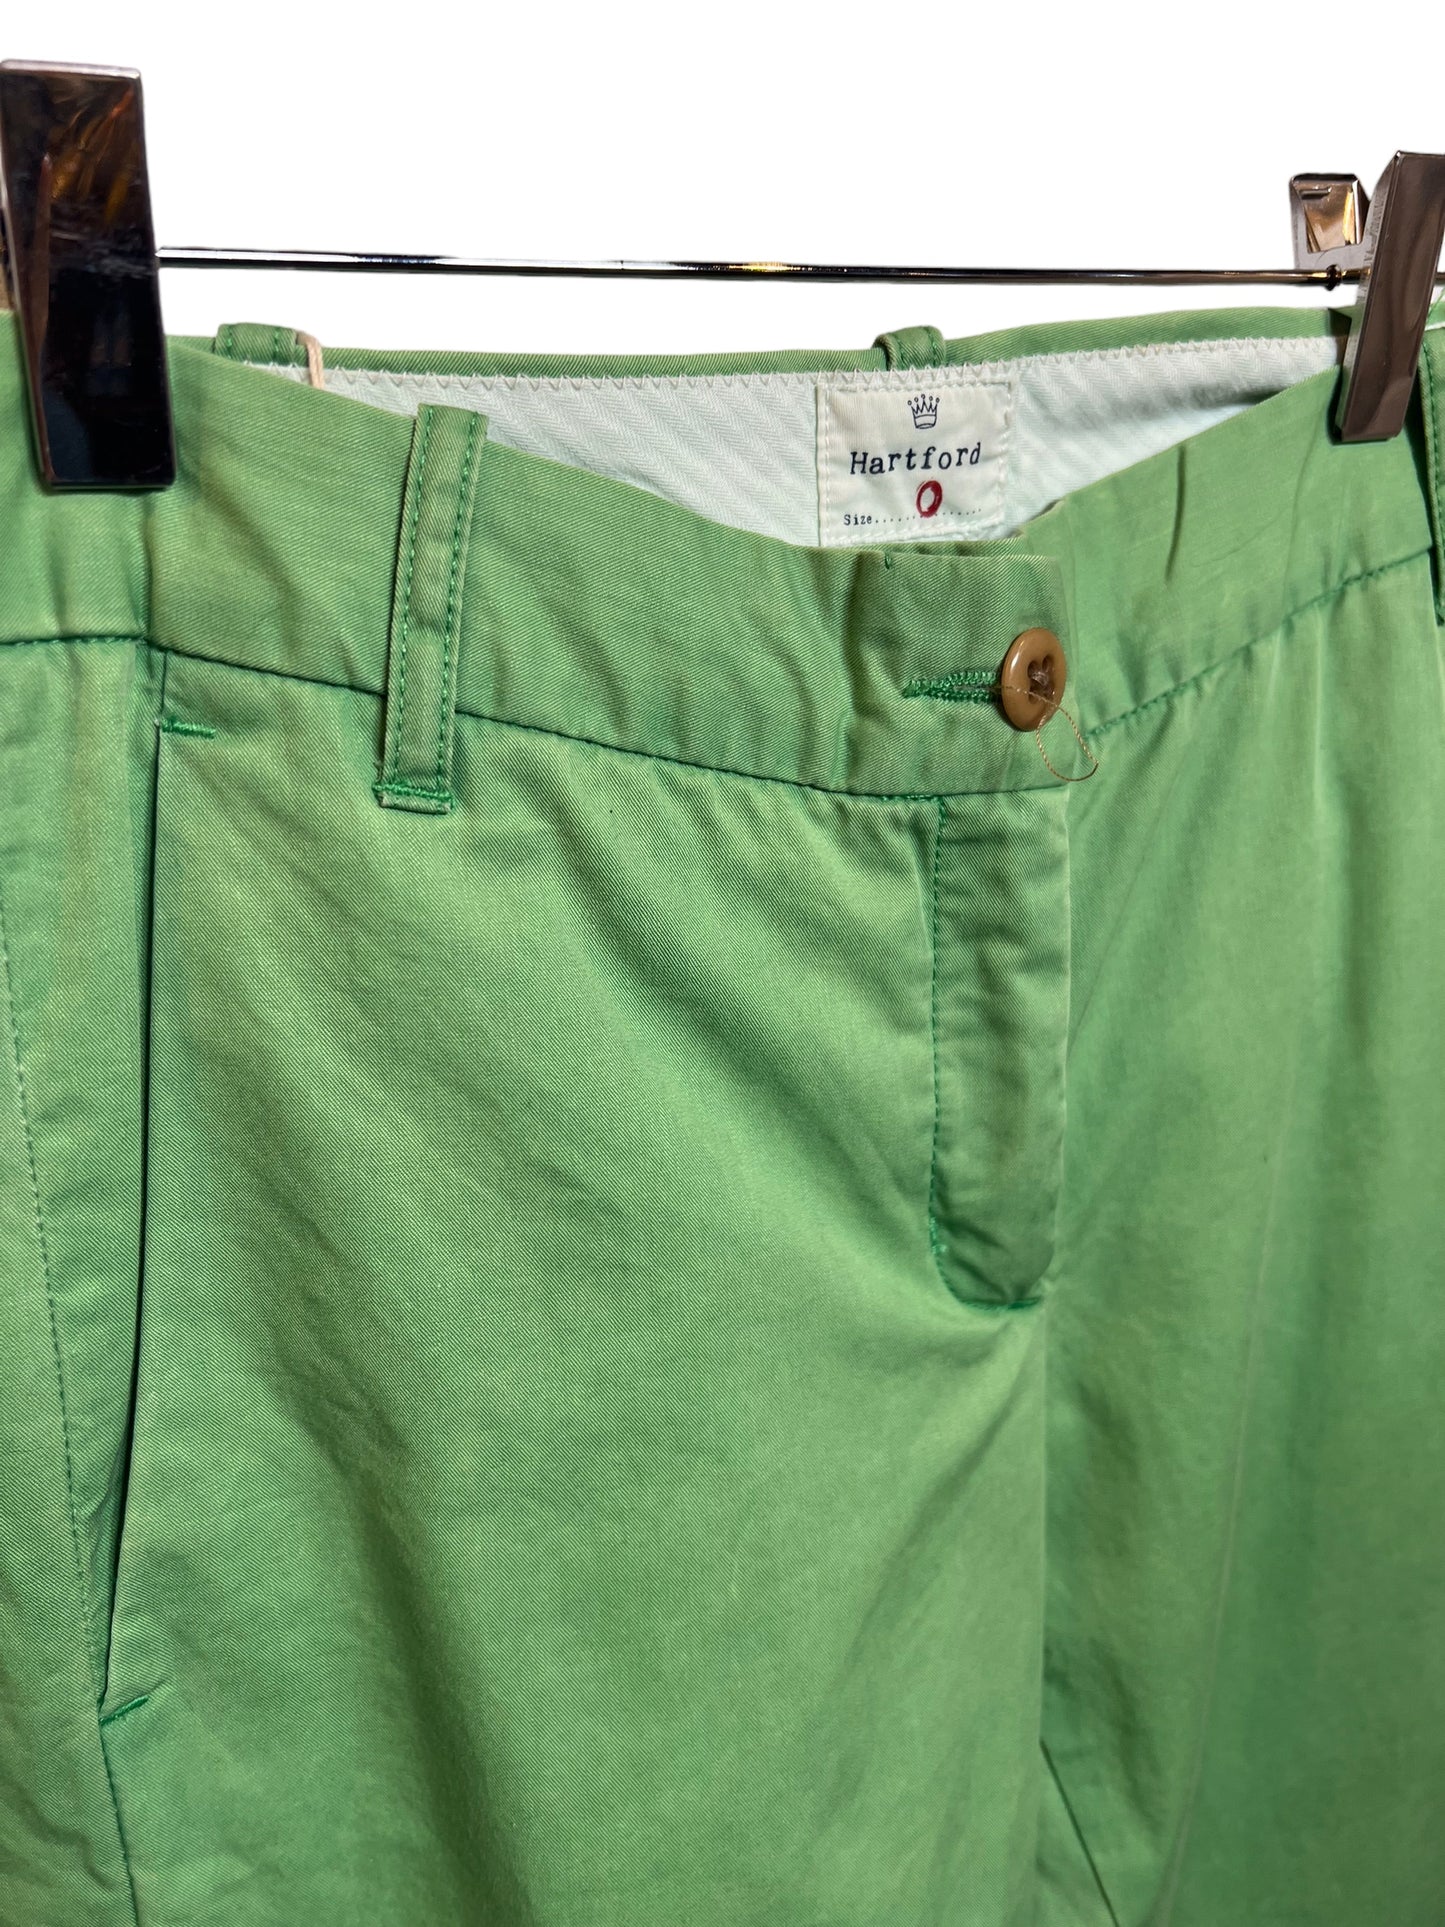 Hartford Women’s Green Trousers (Size W28)